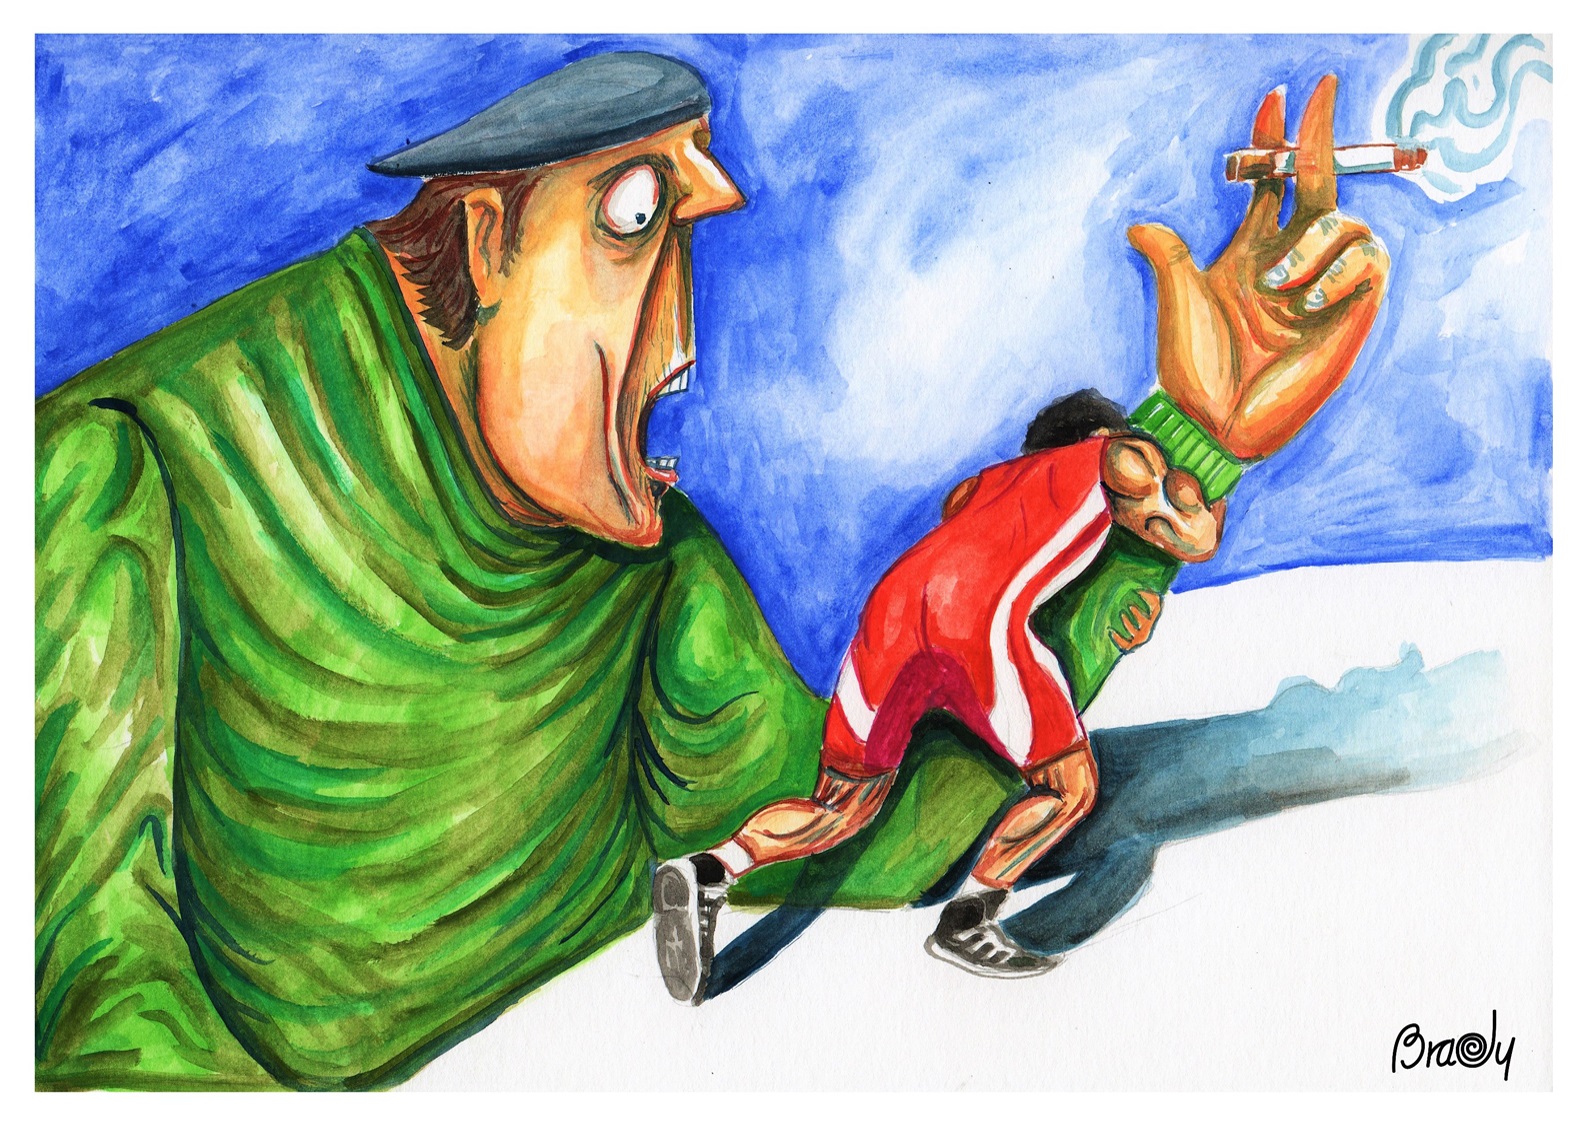 Turkey: Cartoon contest to raise awareness on addiction